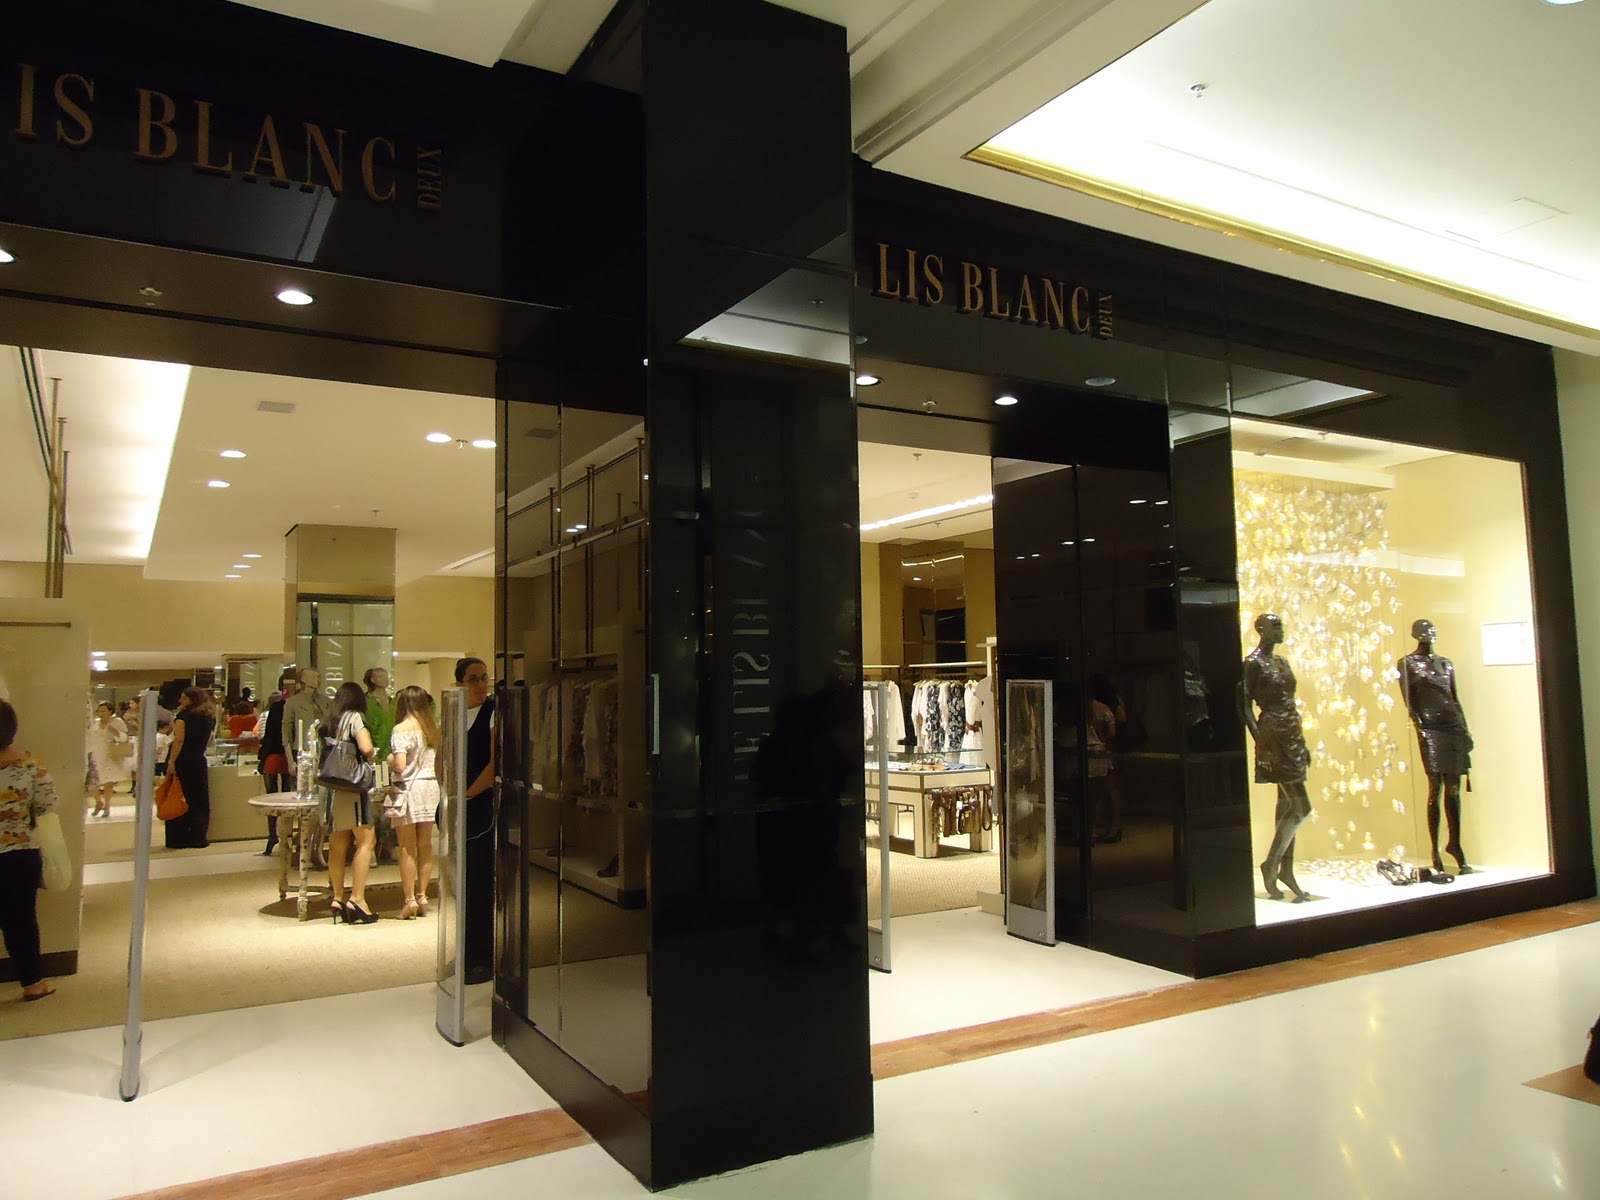 ByMiih: Inauguração Le Lis Blanc (Shopping Iguatemi Campinas)